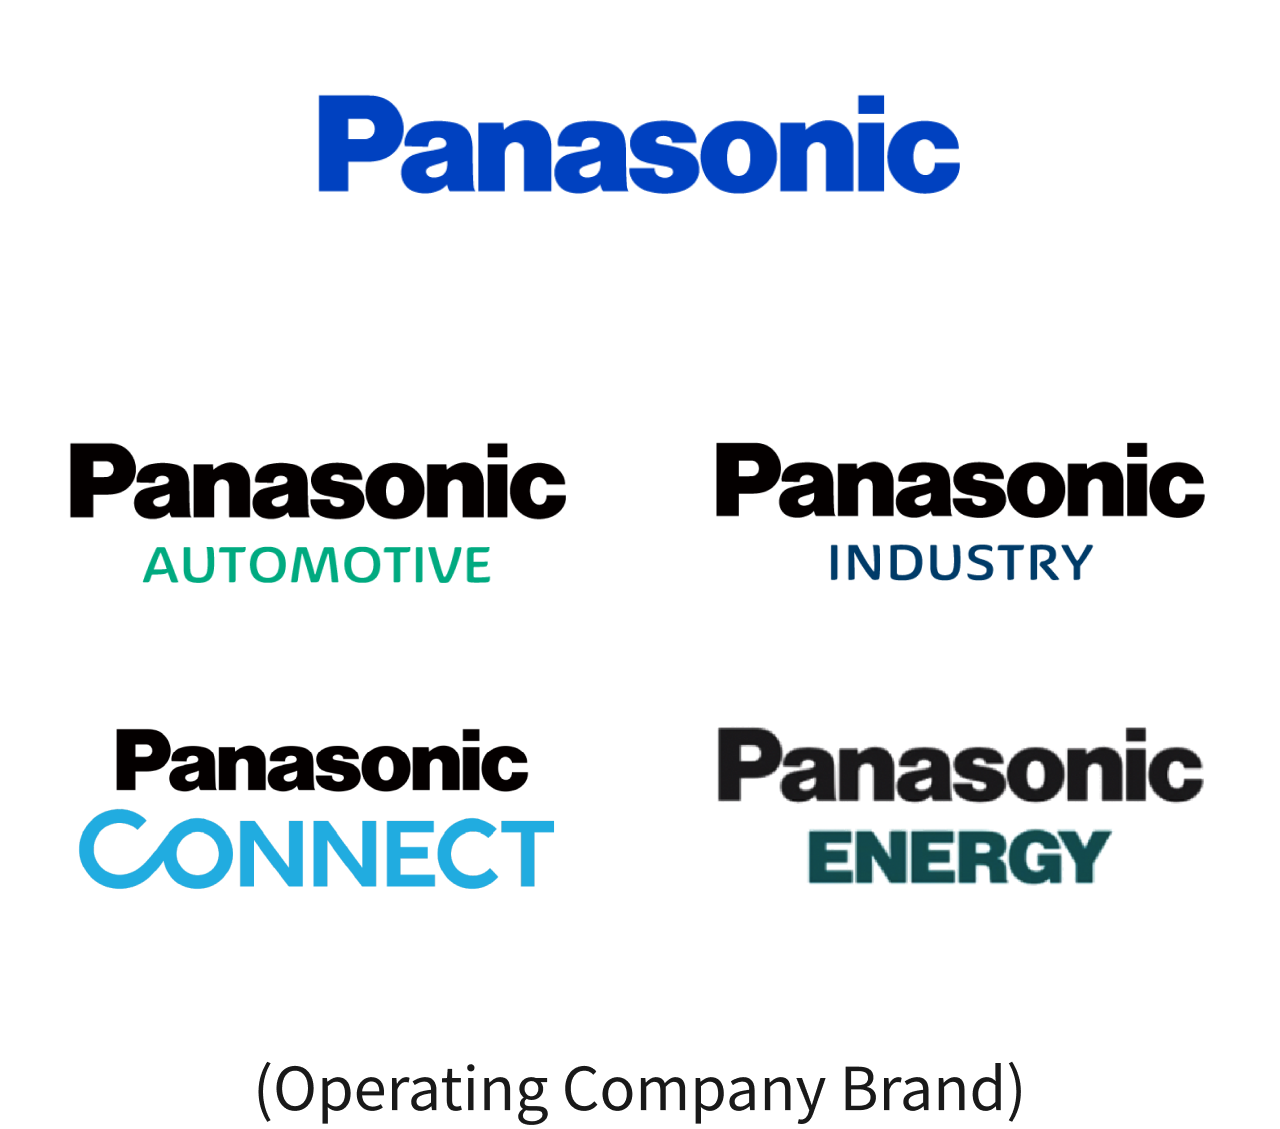 Panasonic (Group brand), Panasonic AUTOMOTIVE (Business brand), Panasonic INDUSTRY (Business brand), Panasonic CONNECT (Business brand), Panasonic ENERGY (Business brand)